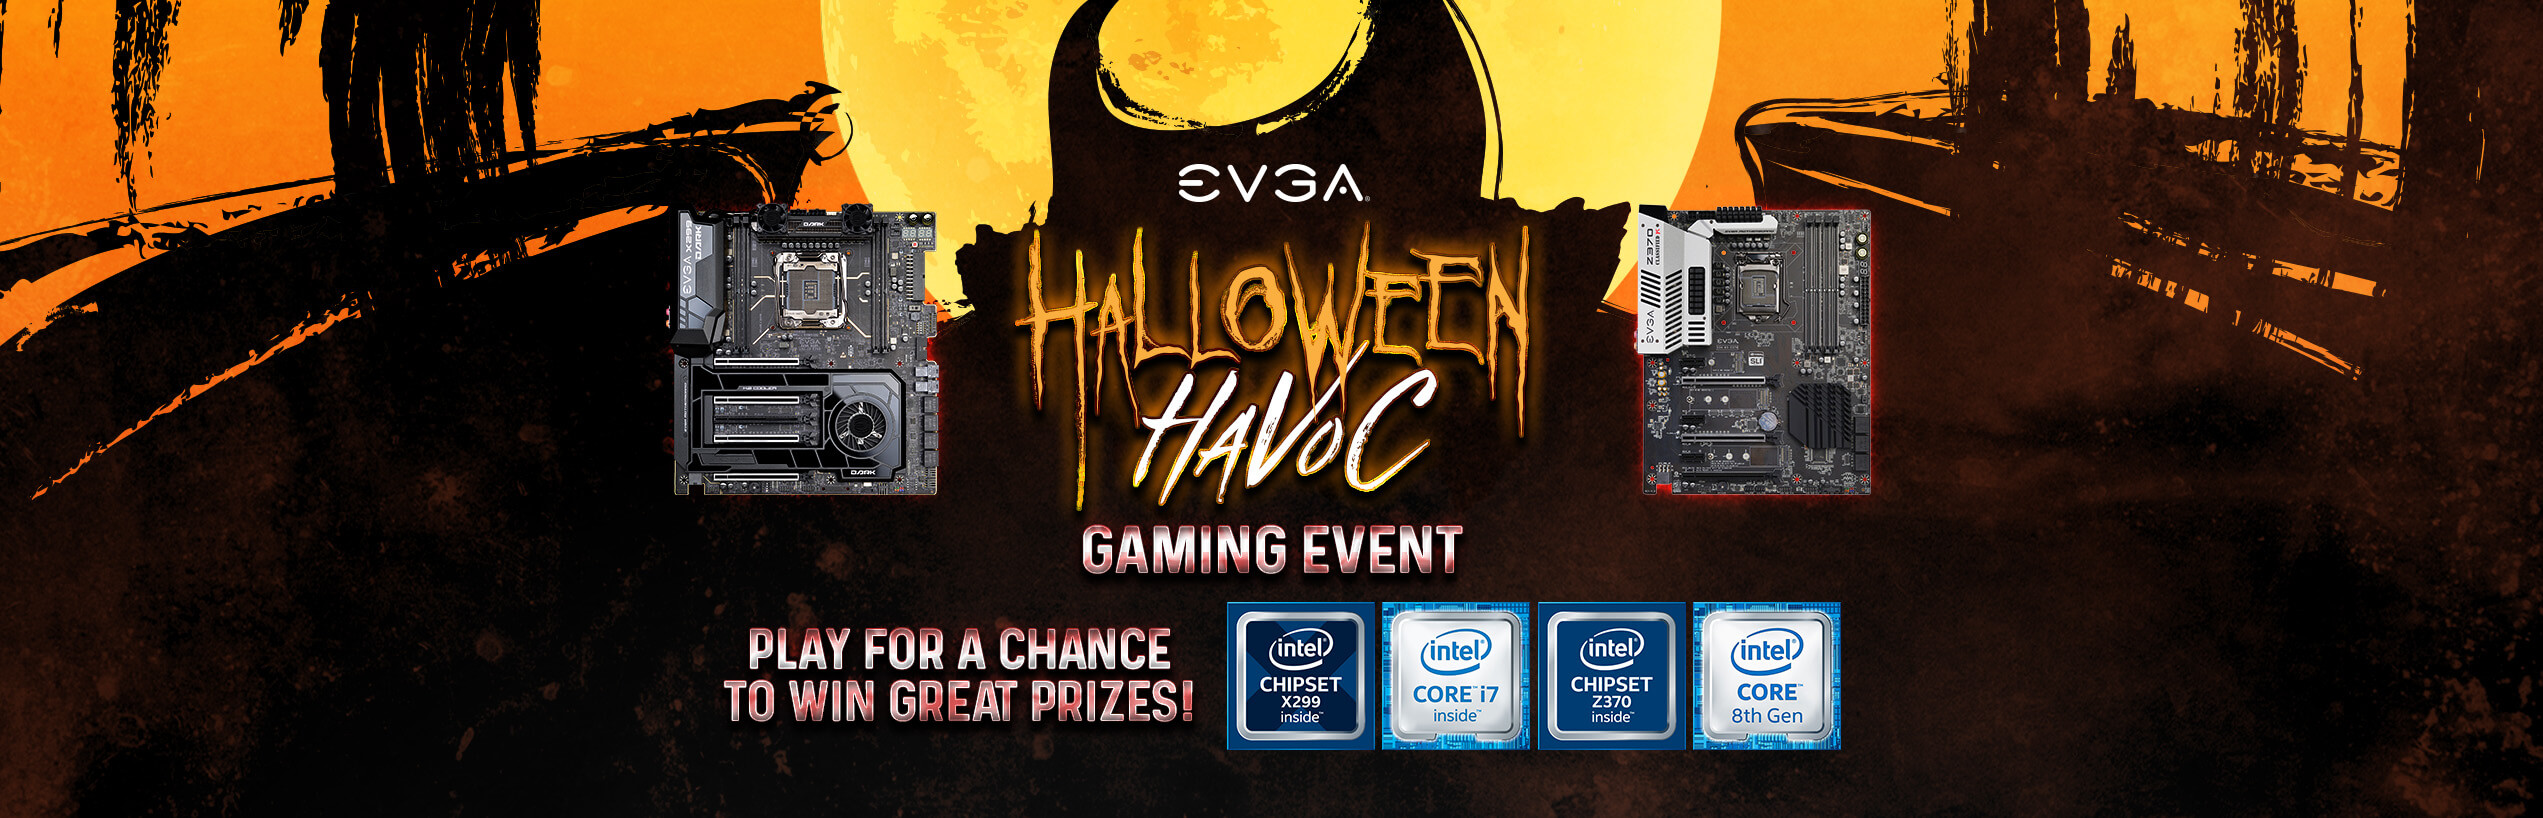 Halloween Havoc Gaming Event